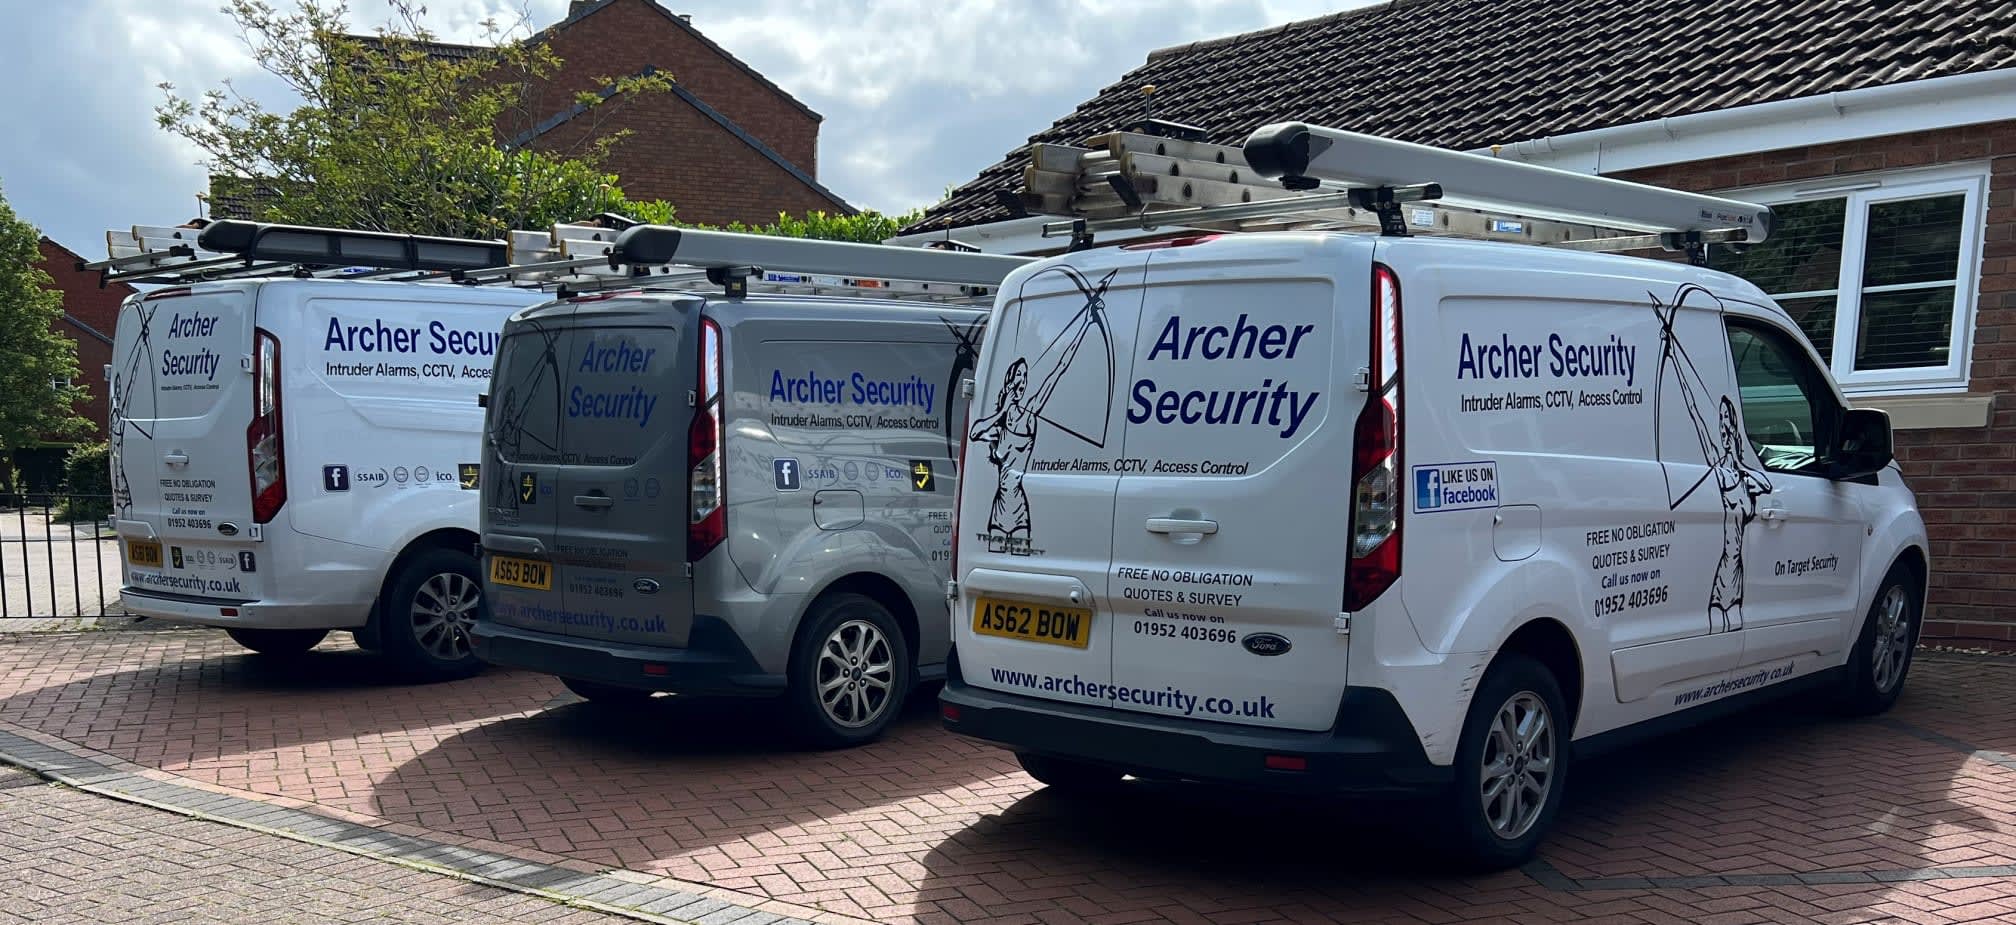 Archer Security Ltd Telford 01952 403696